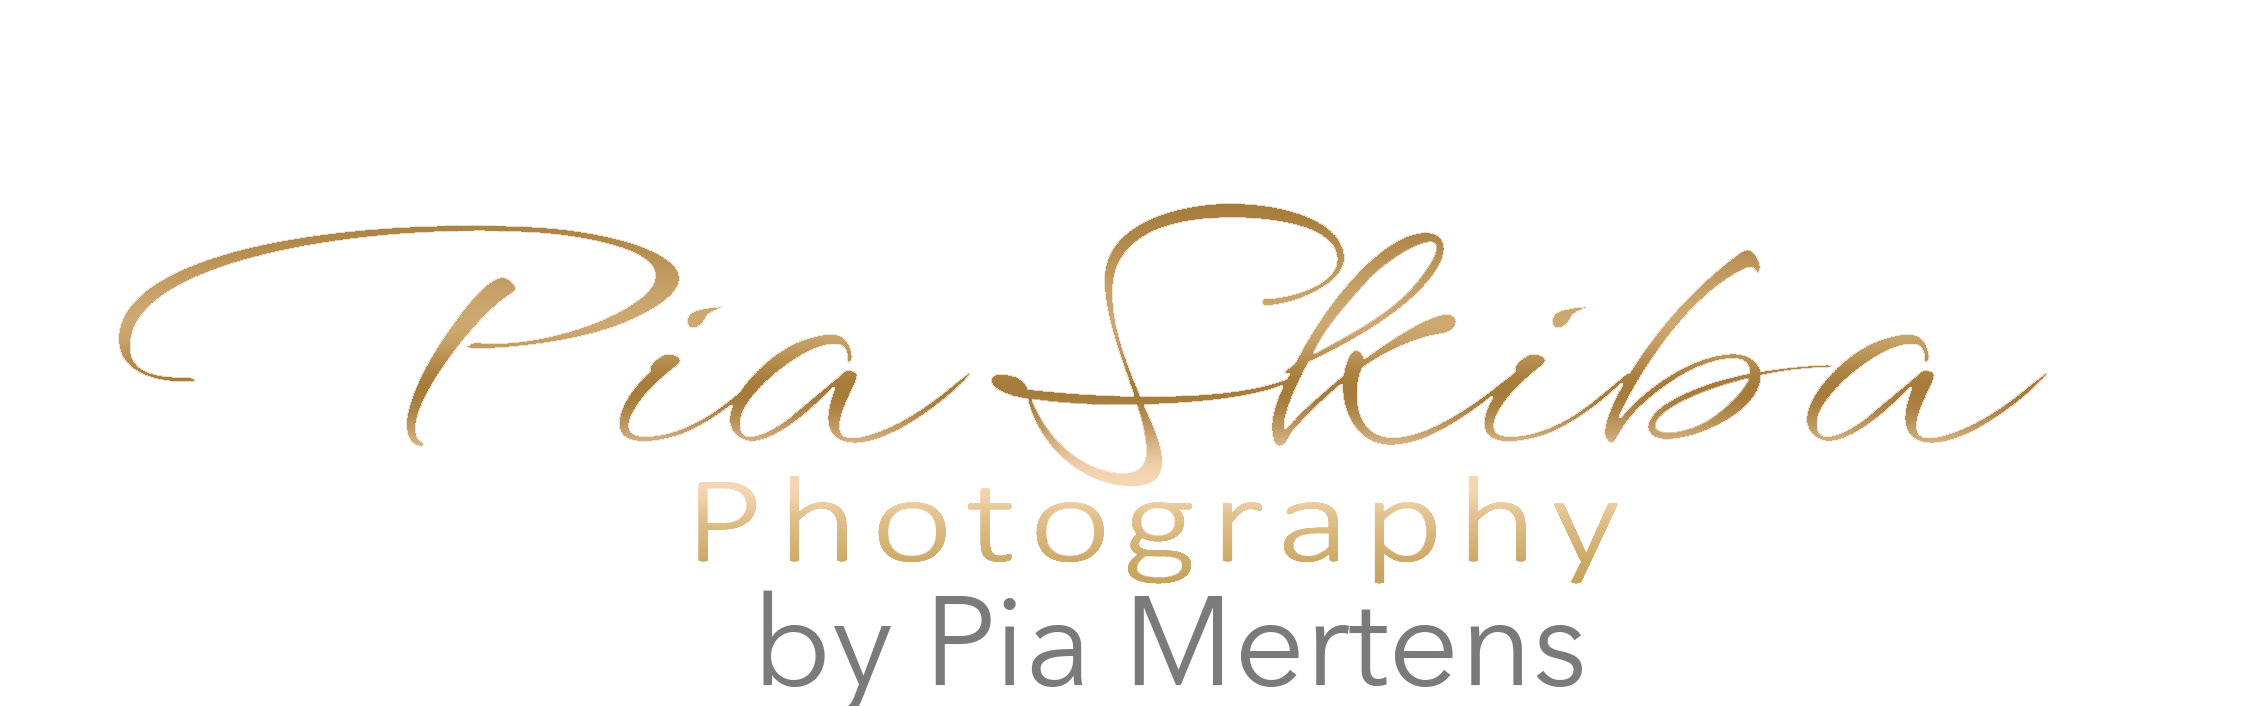 Pia Skiba Photography I Pia Mertens